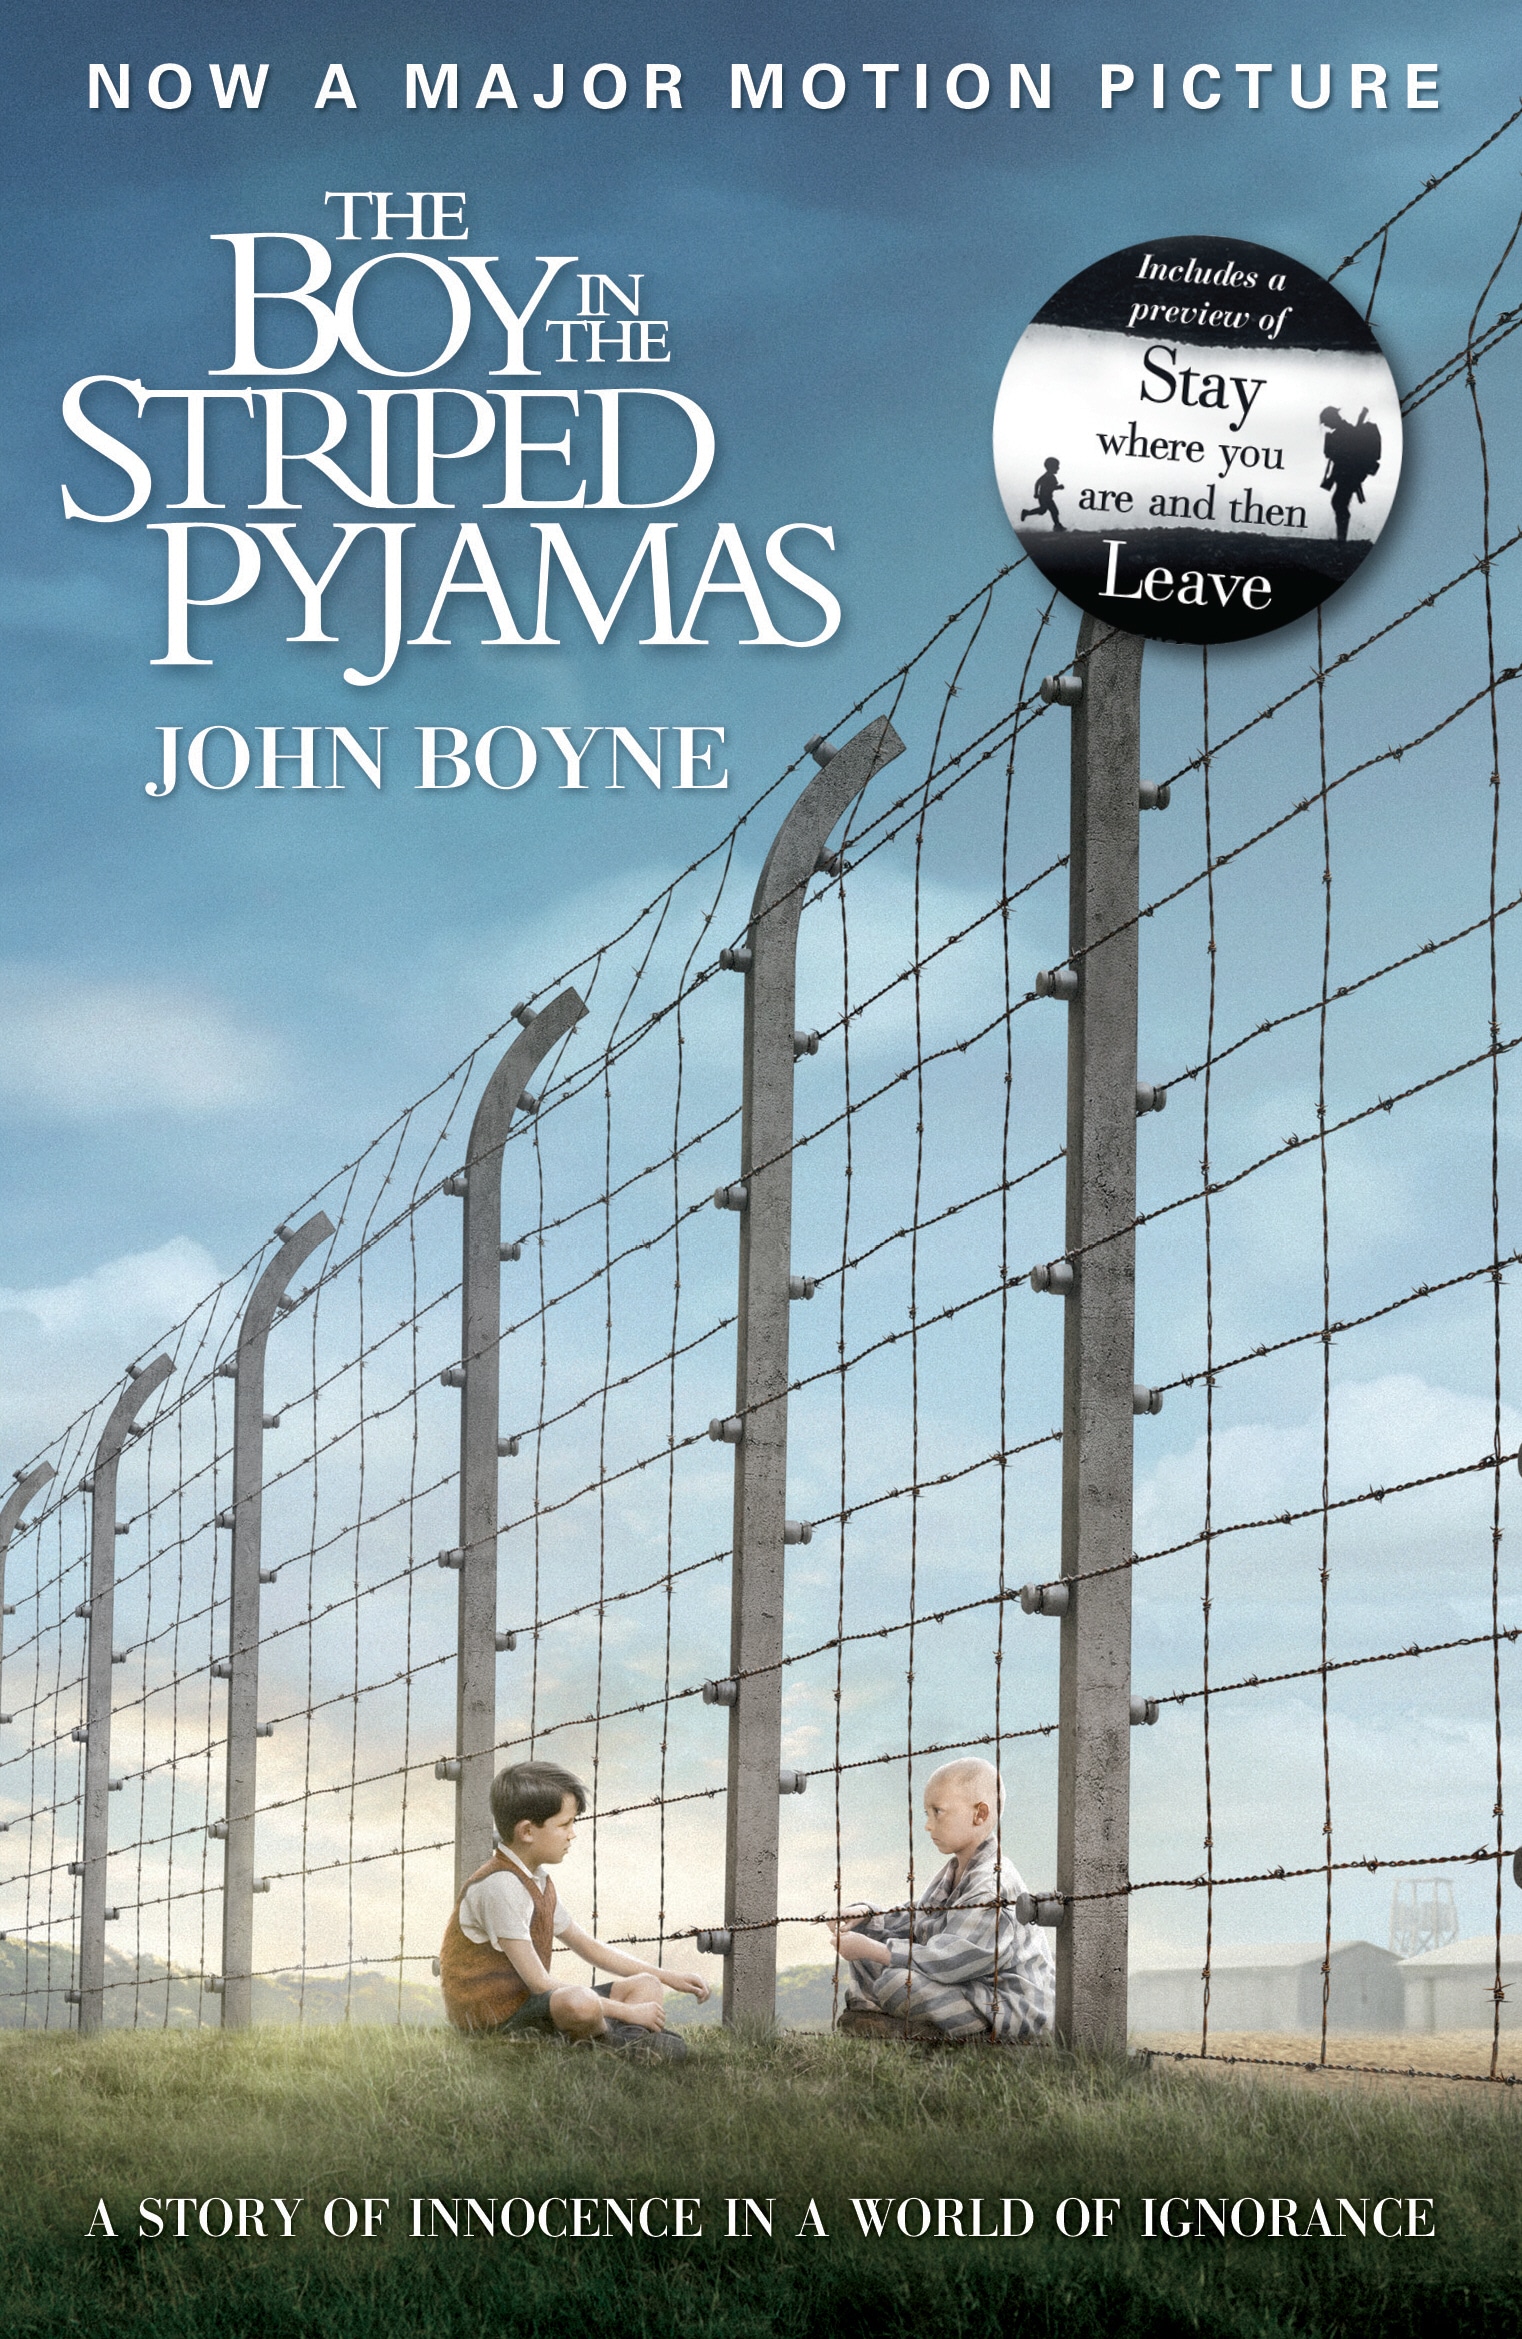 Book “The Boy in the Striped Pyjamas” by John Boyne — September 11, 2008